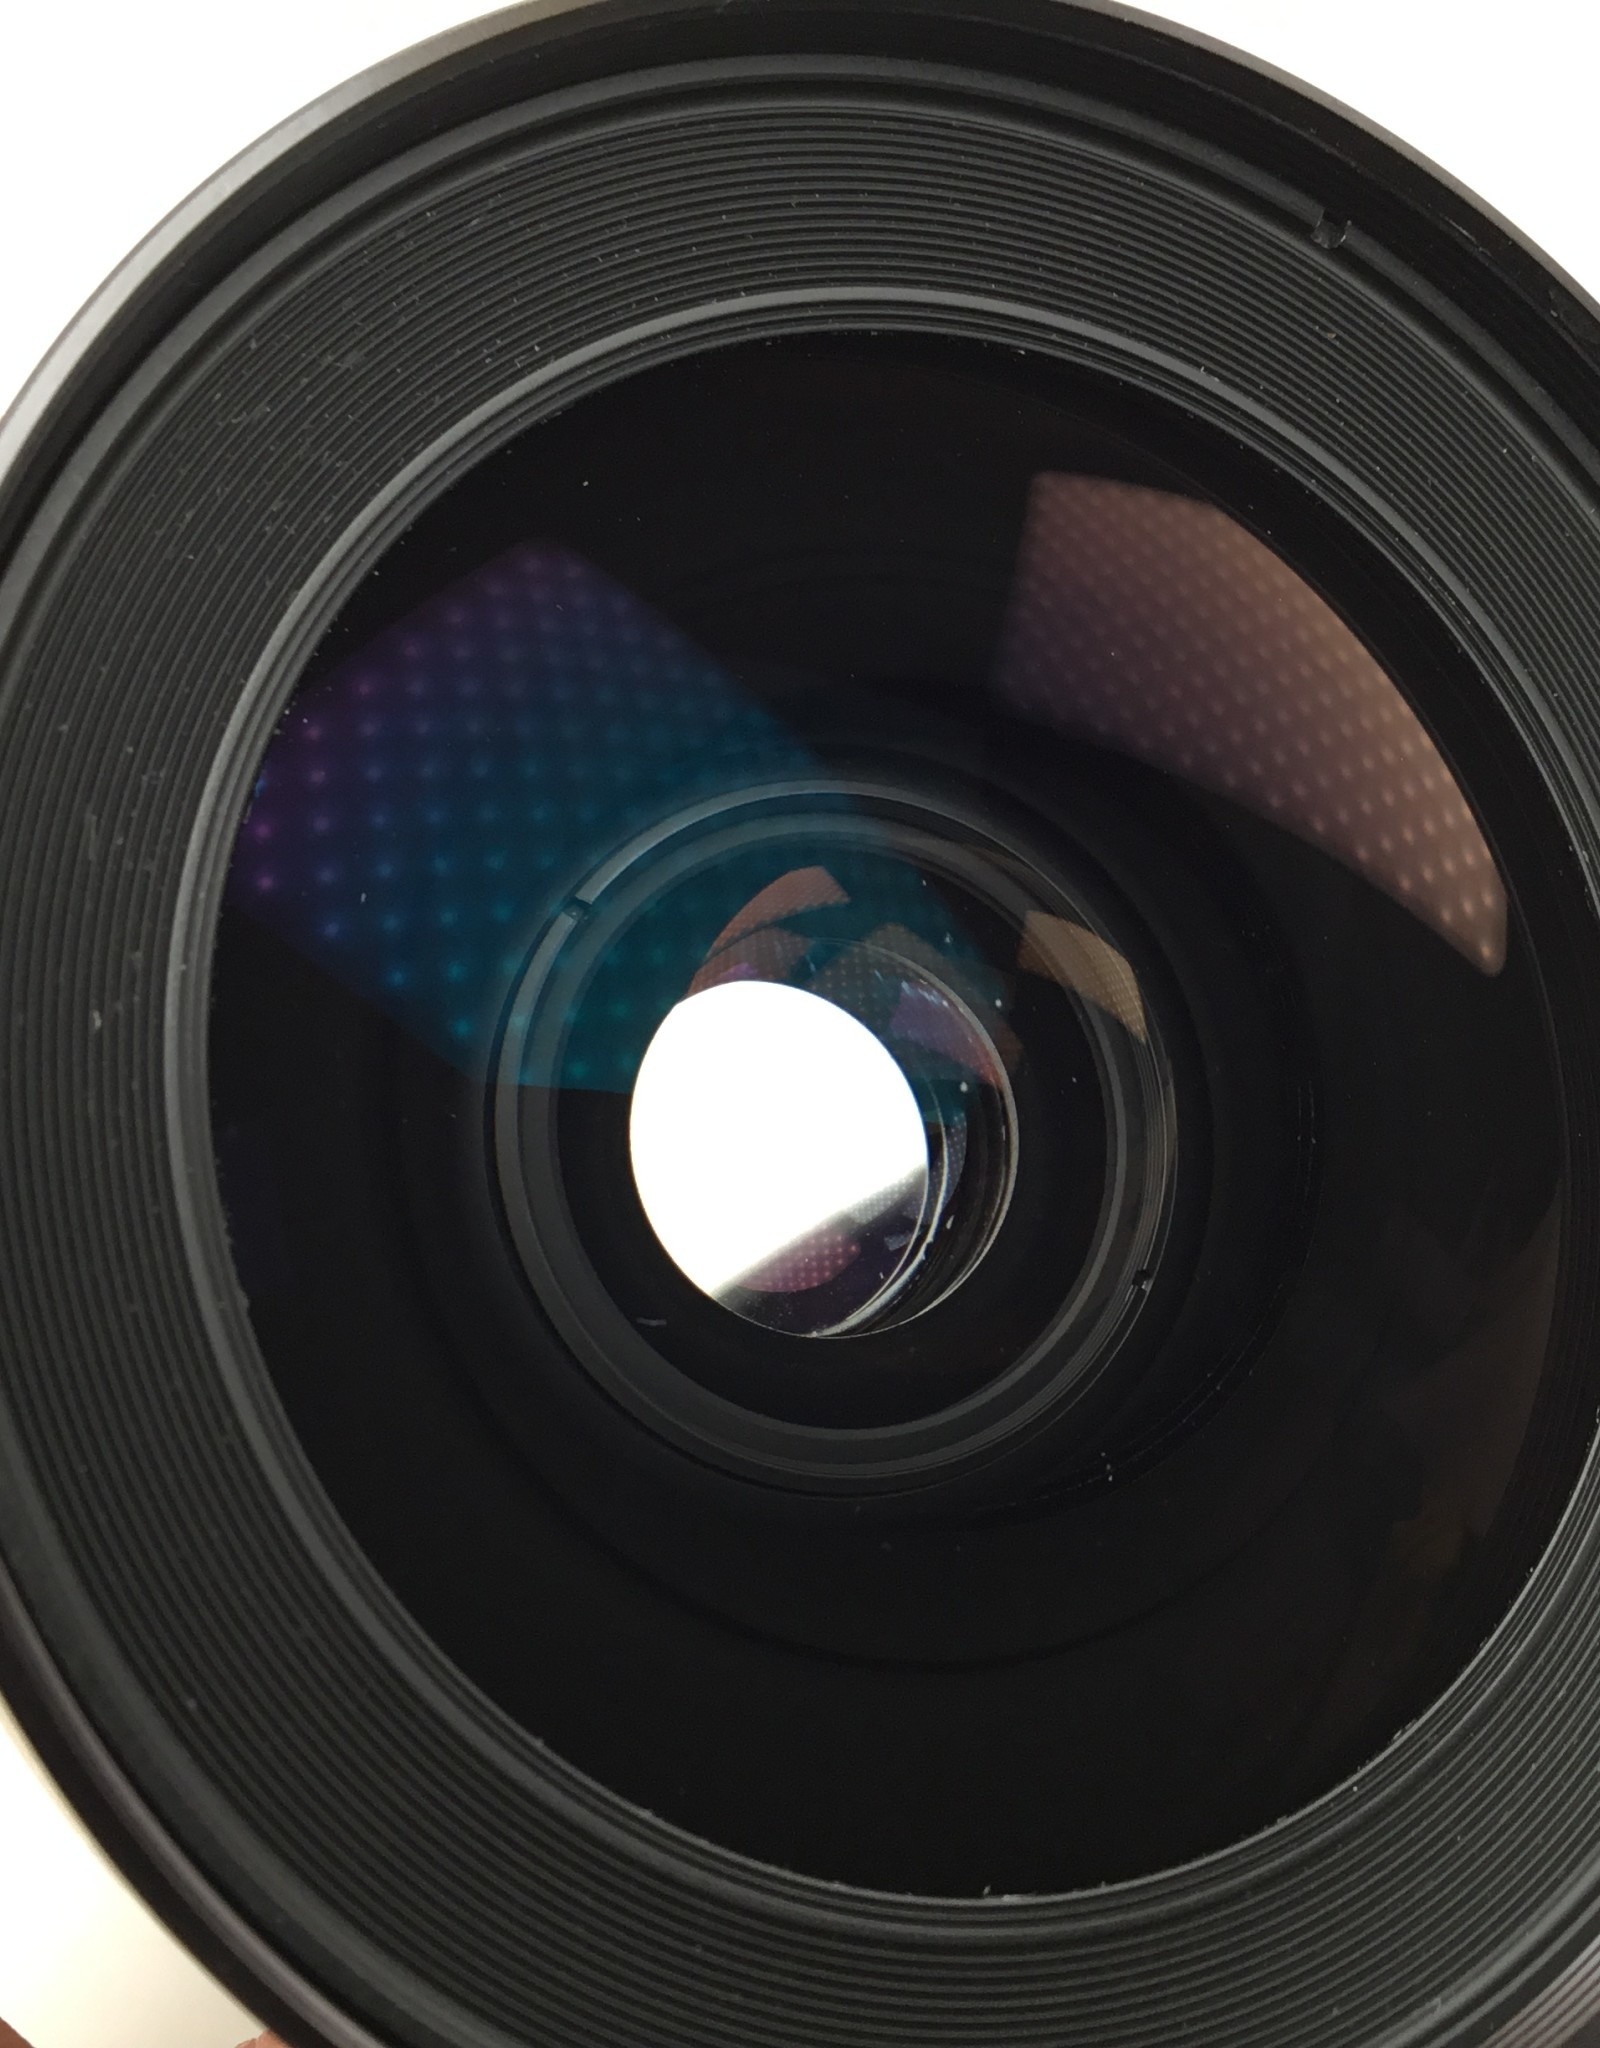 Schneider Schneider Super Angulon 90mm f5.6 MC Lens Used Fair